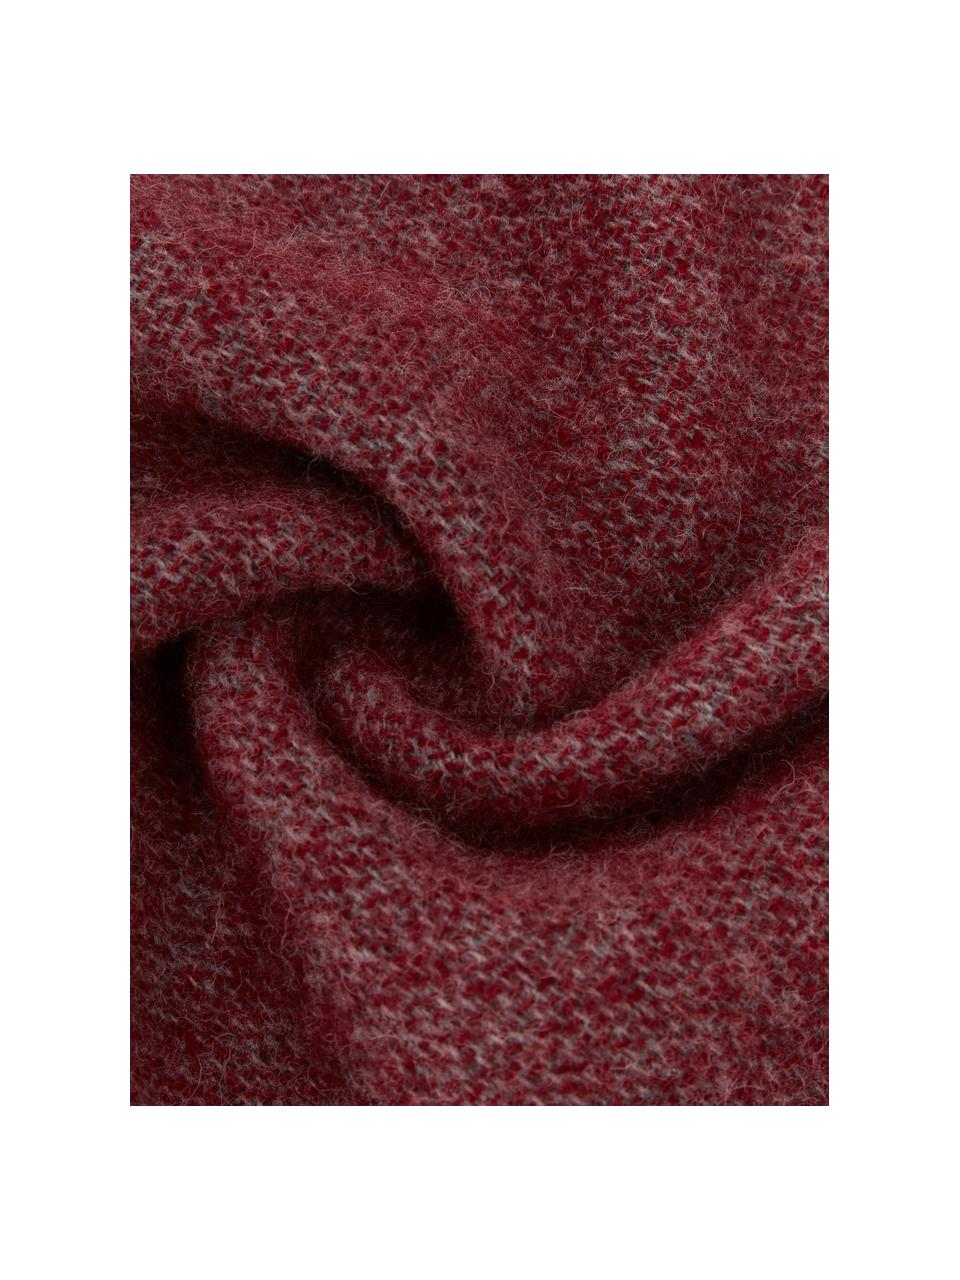 Coperta reversibile in lana maculata color rosso/grigio con frange Triol, Rosso, grigio, Larg. 140 x Lung. 200 cm